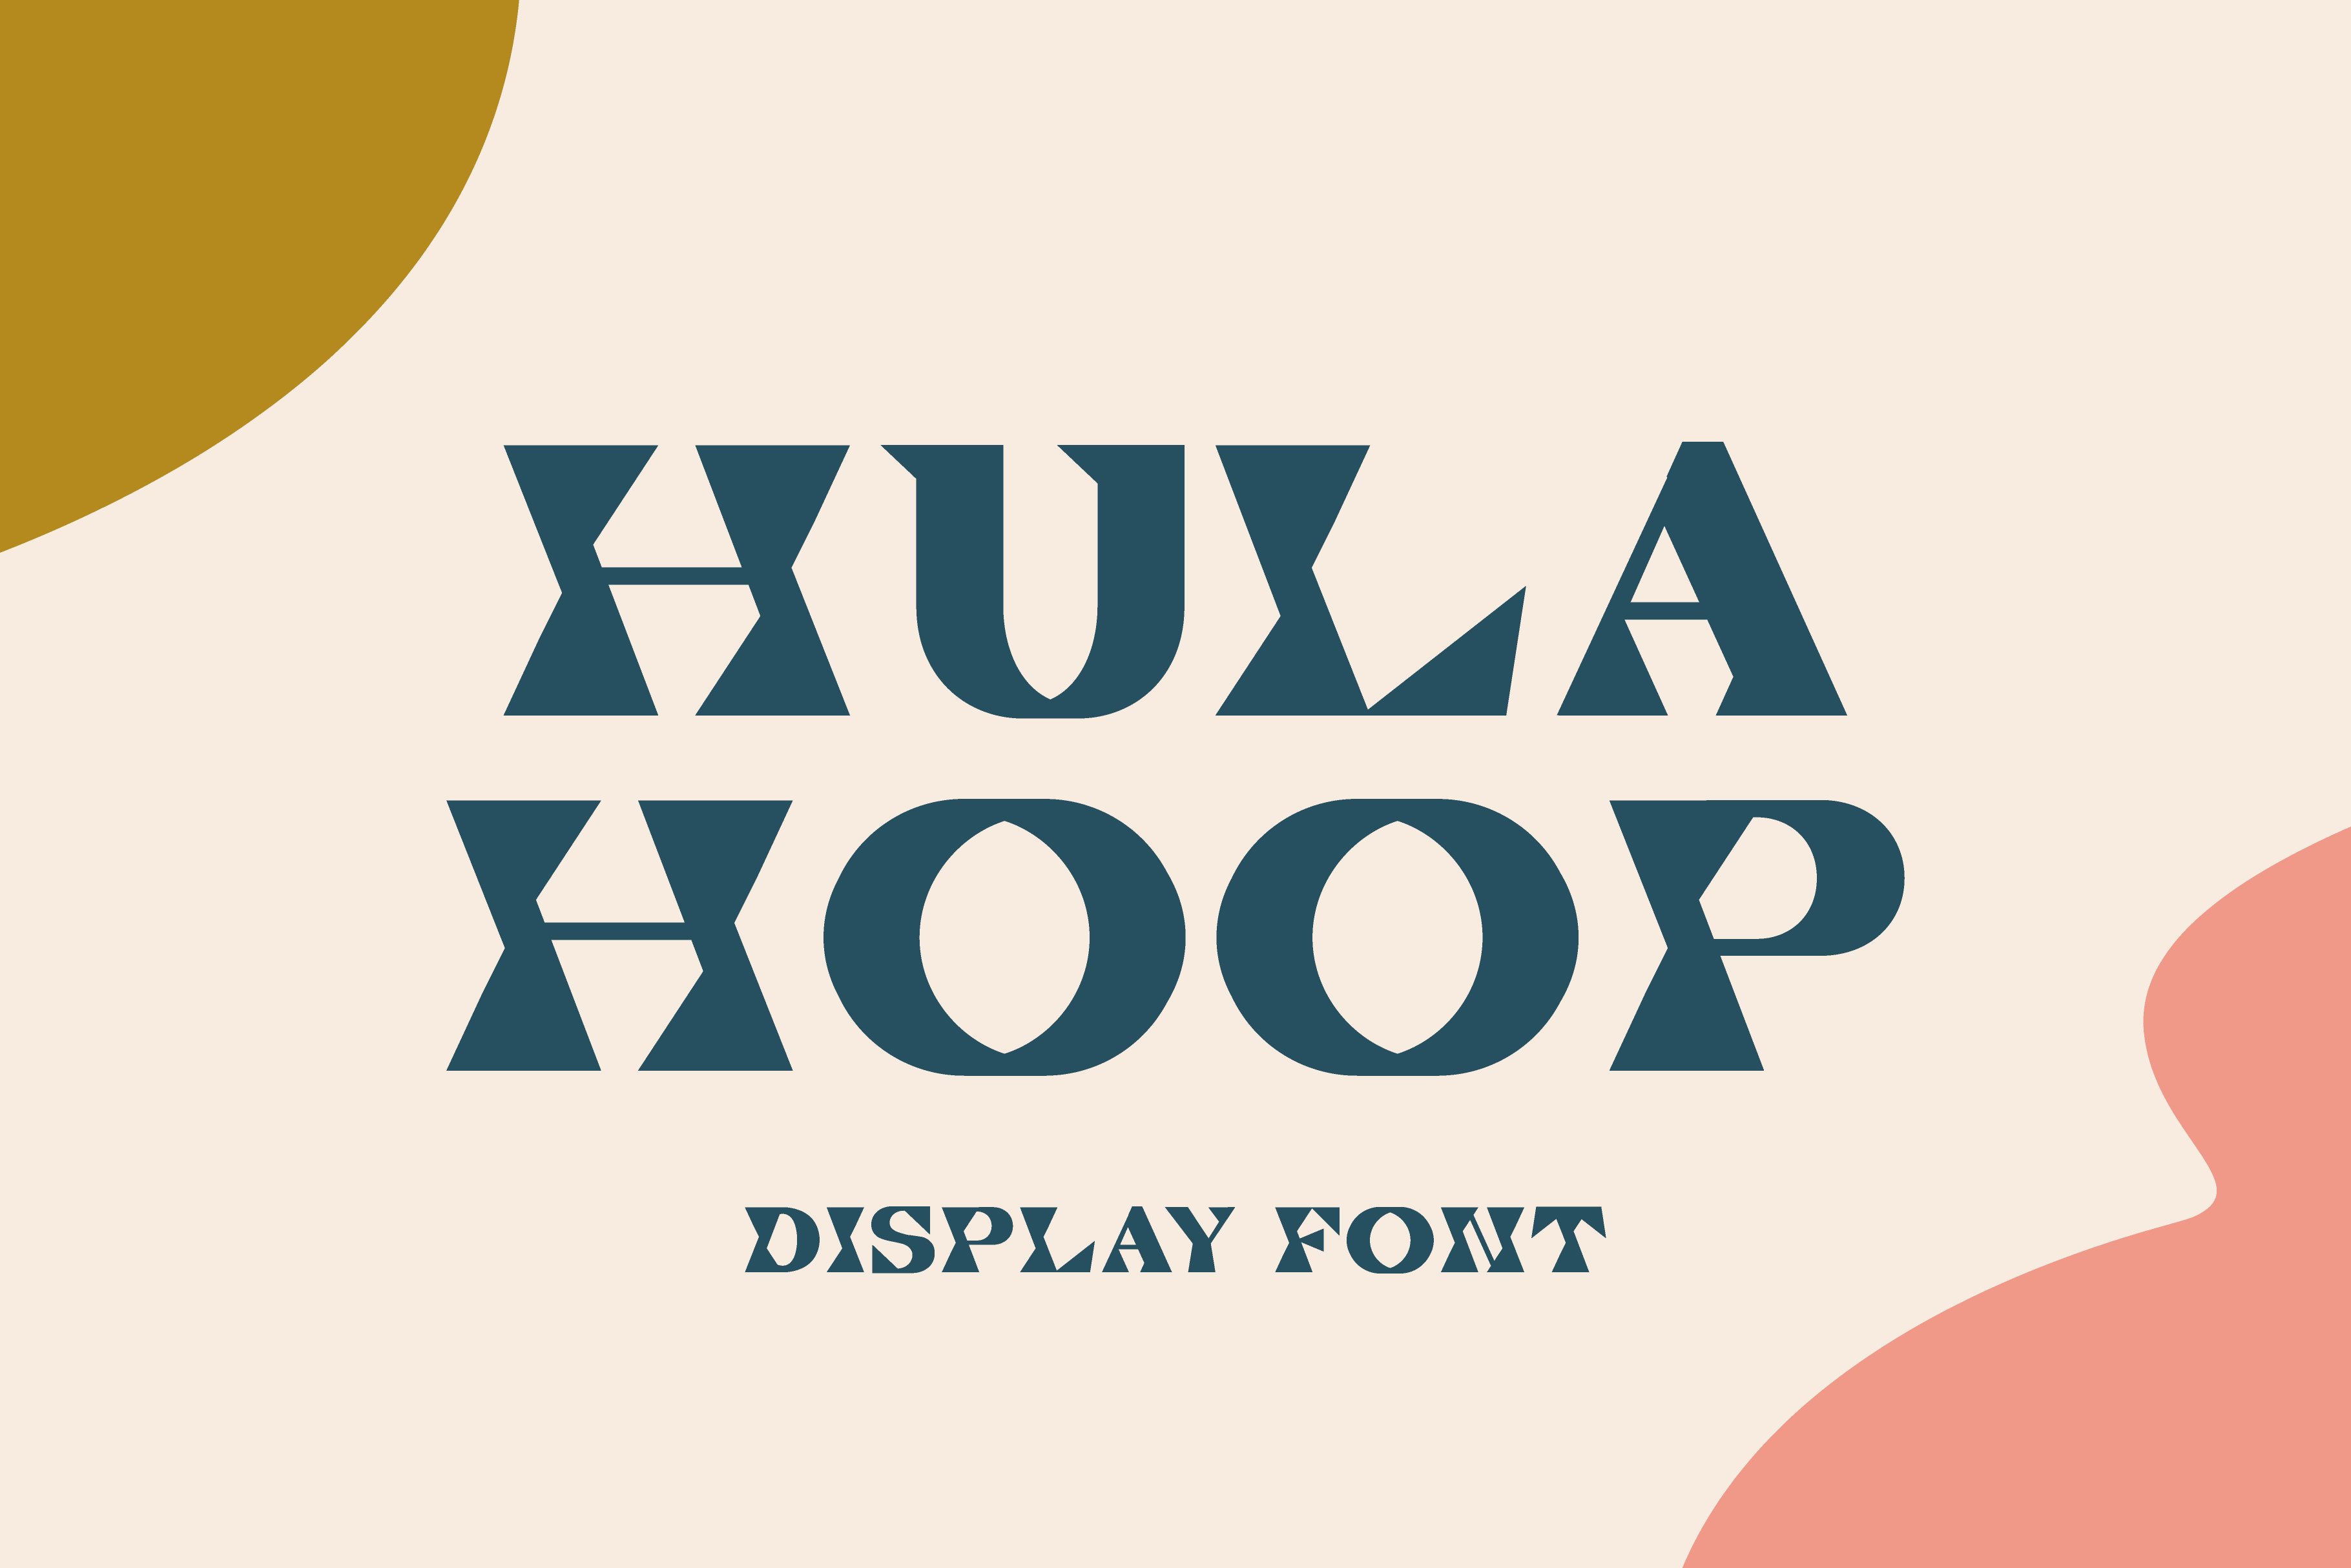 Hula Hoop - Fun Display Font cover image.